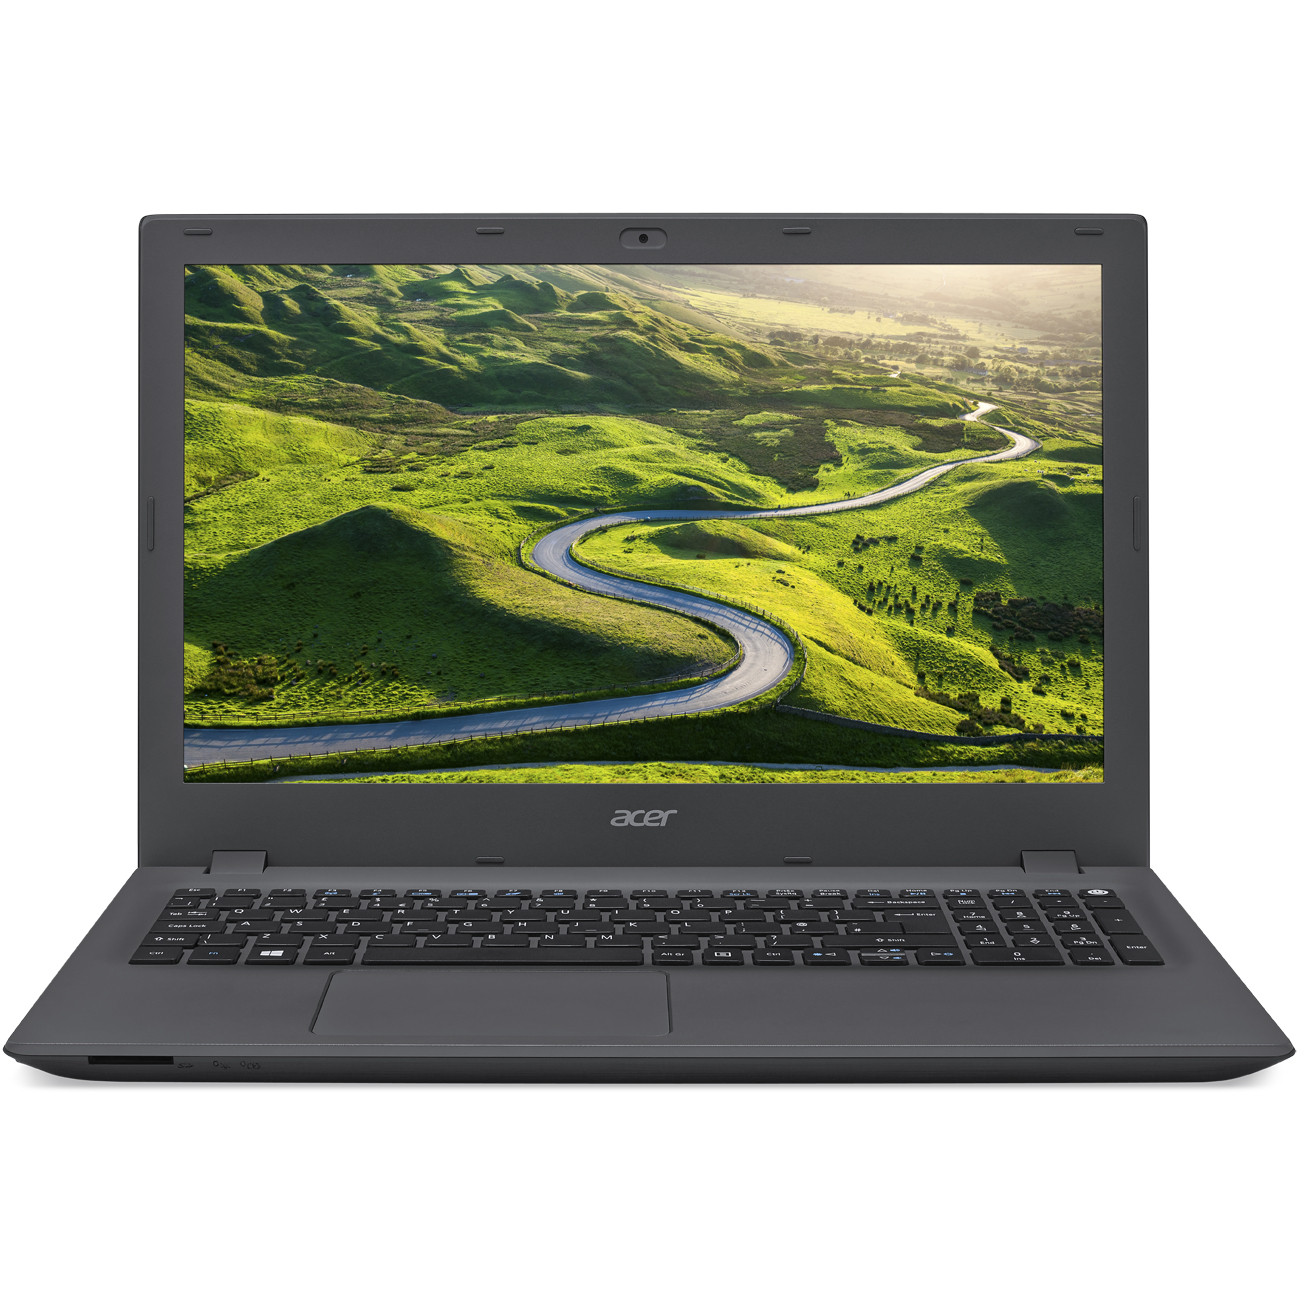  Laptop Acer Aspire E5-574G, Intel Core i7-6500U, 4GB DDR3, HDD 1TB, nVidia GeForce GT 920M 2GB, Linux 